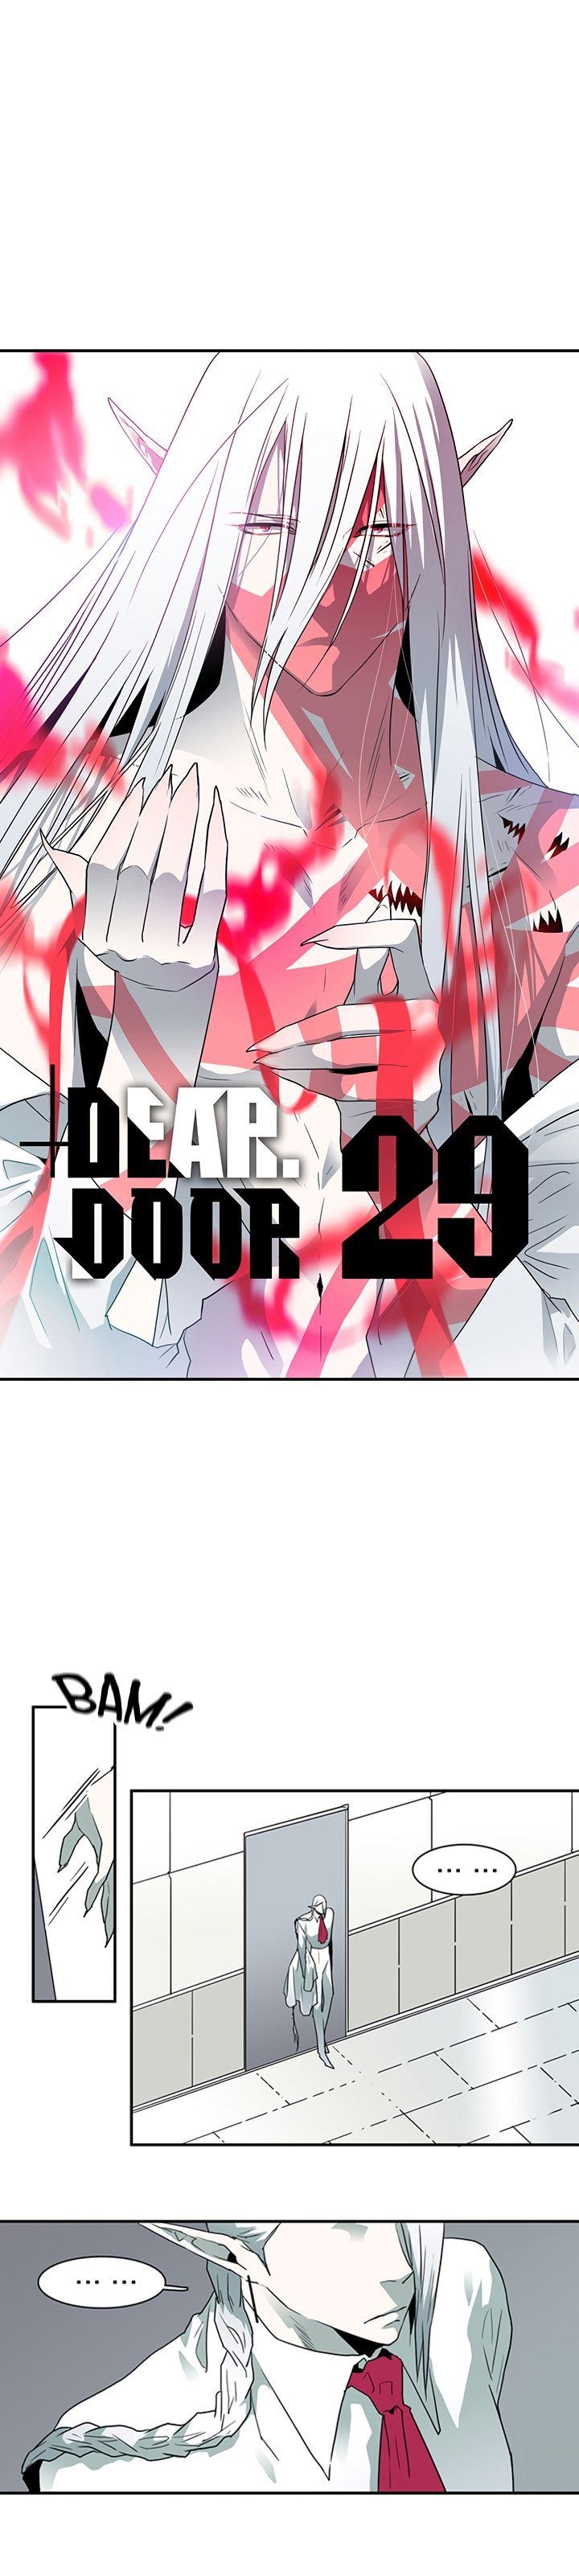 Dear Door 29 1